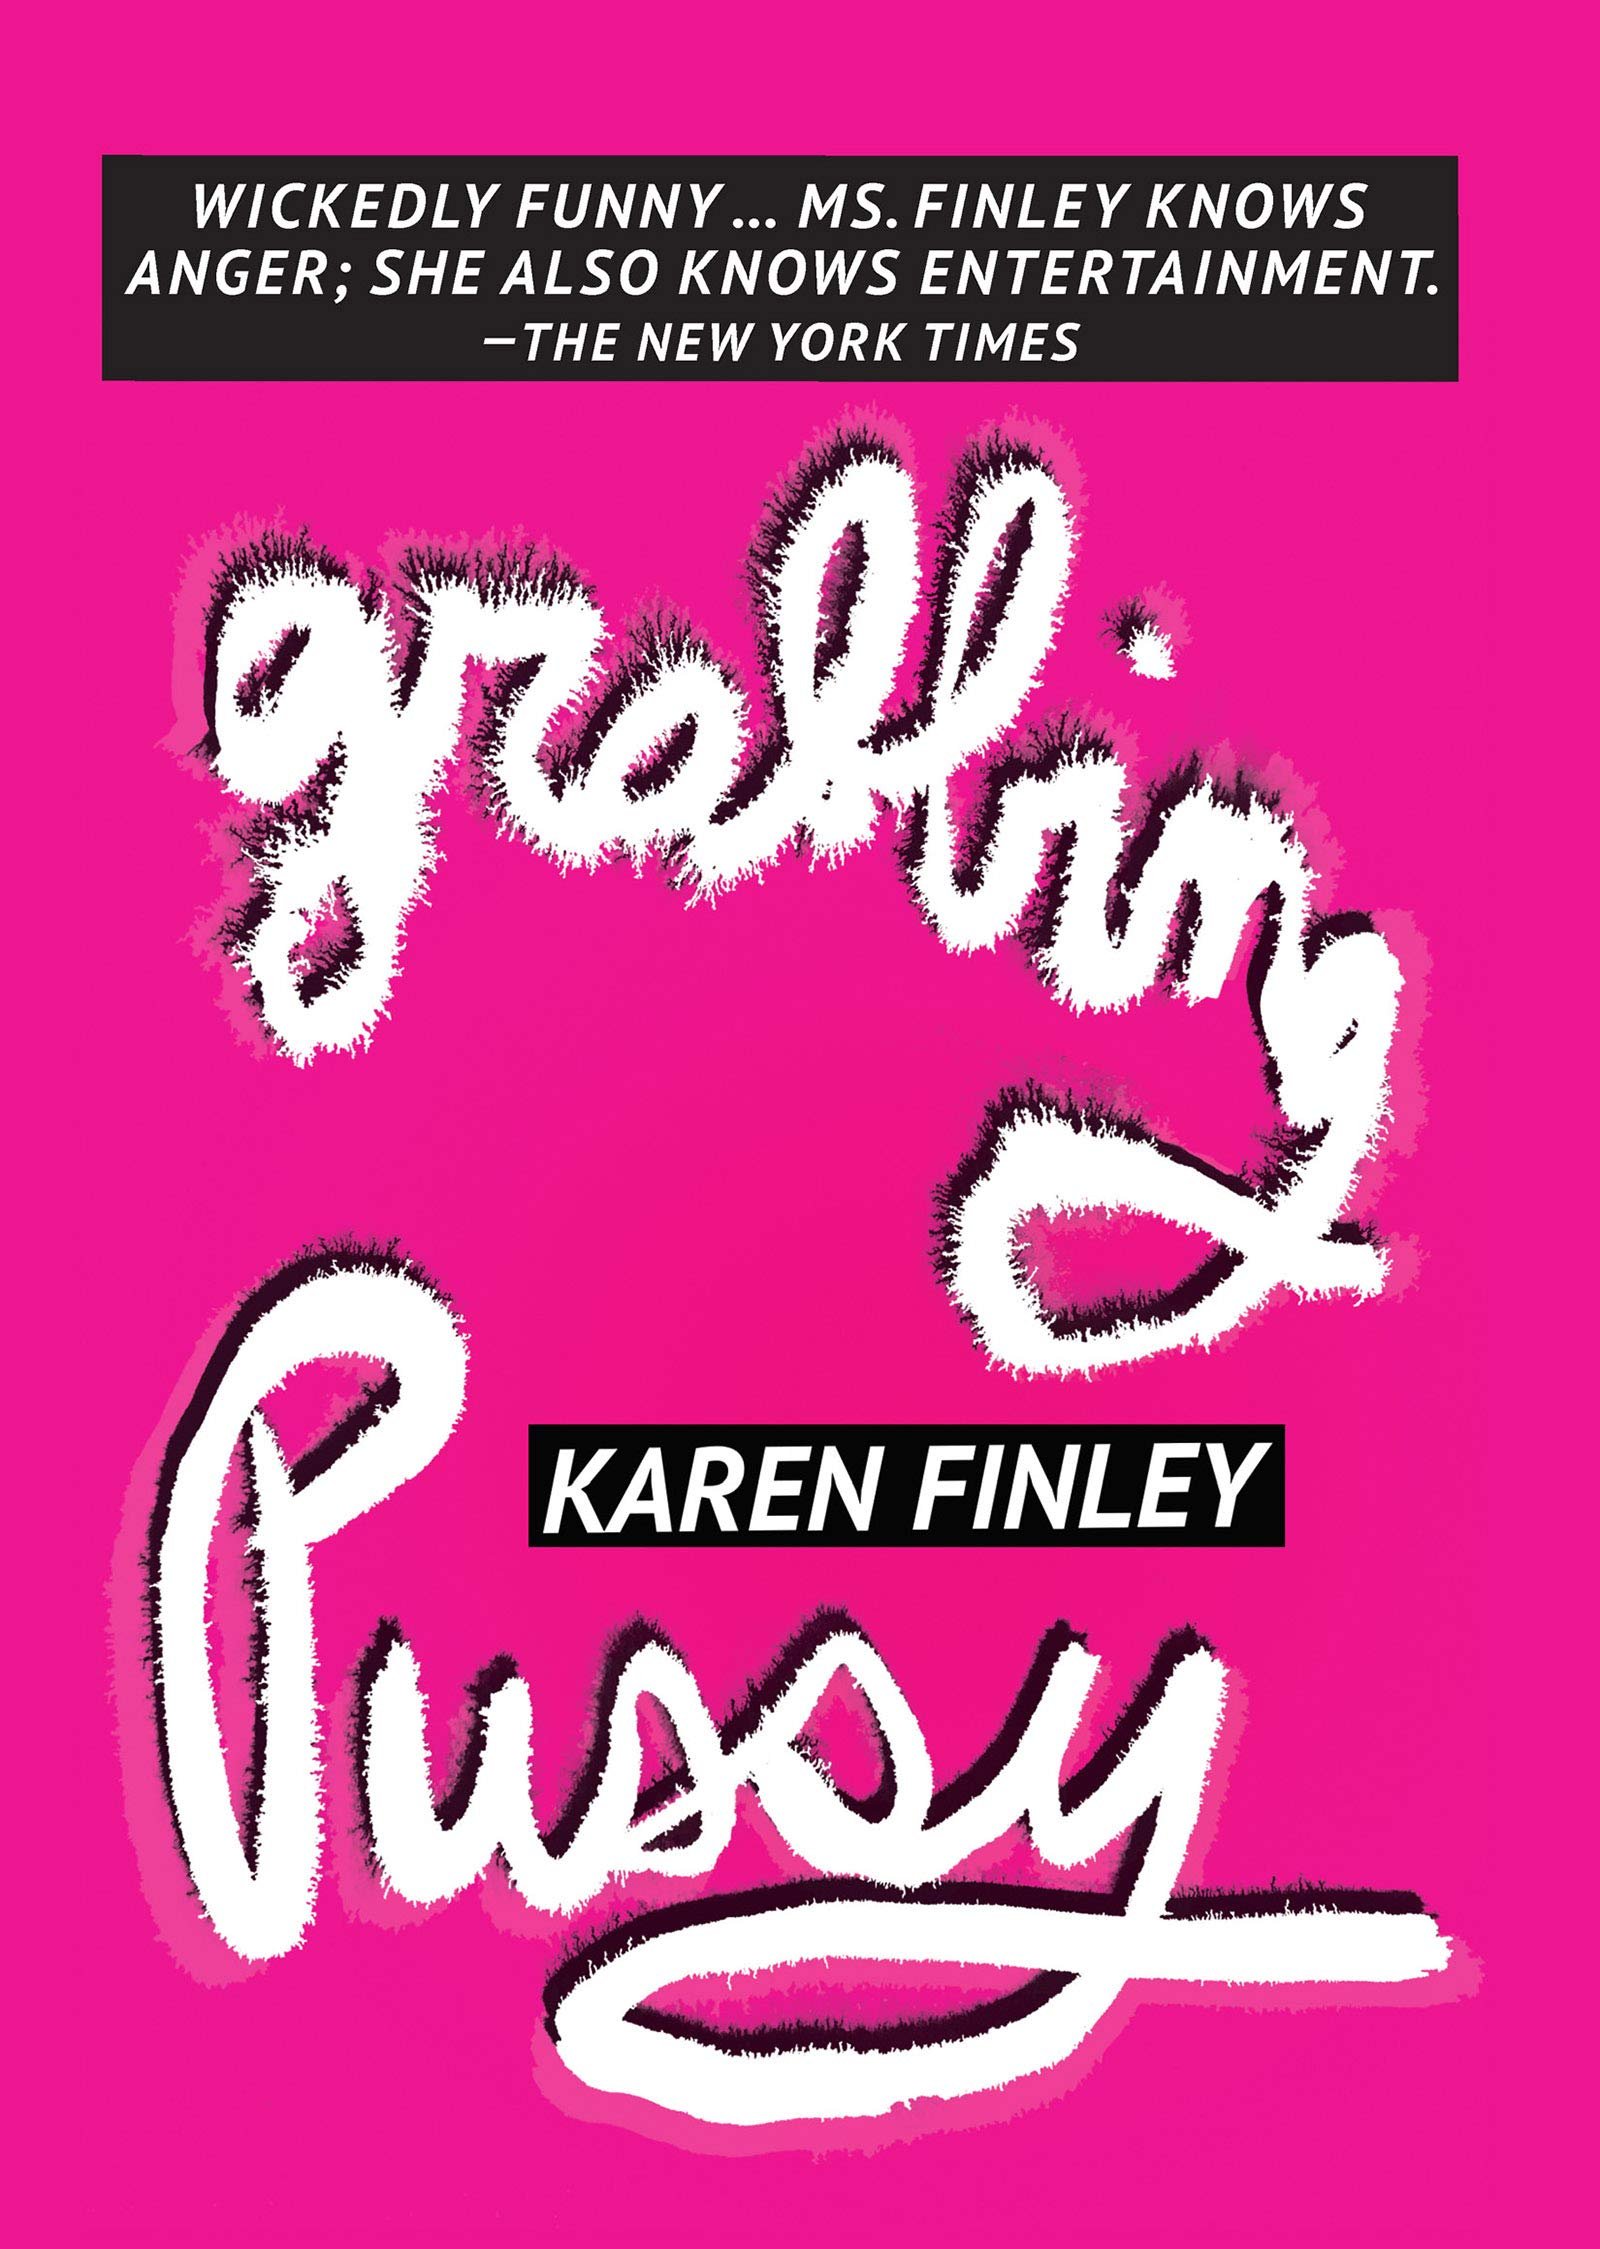 Grabbing-Pussy.jpg